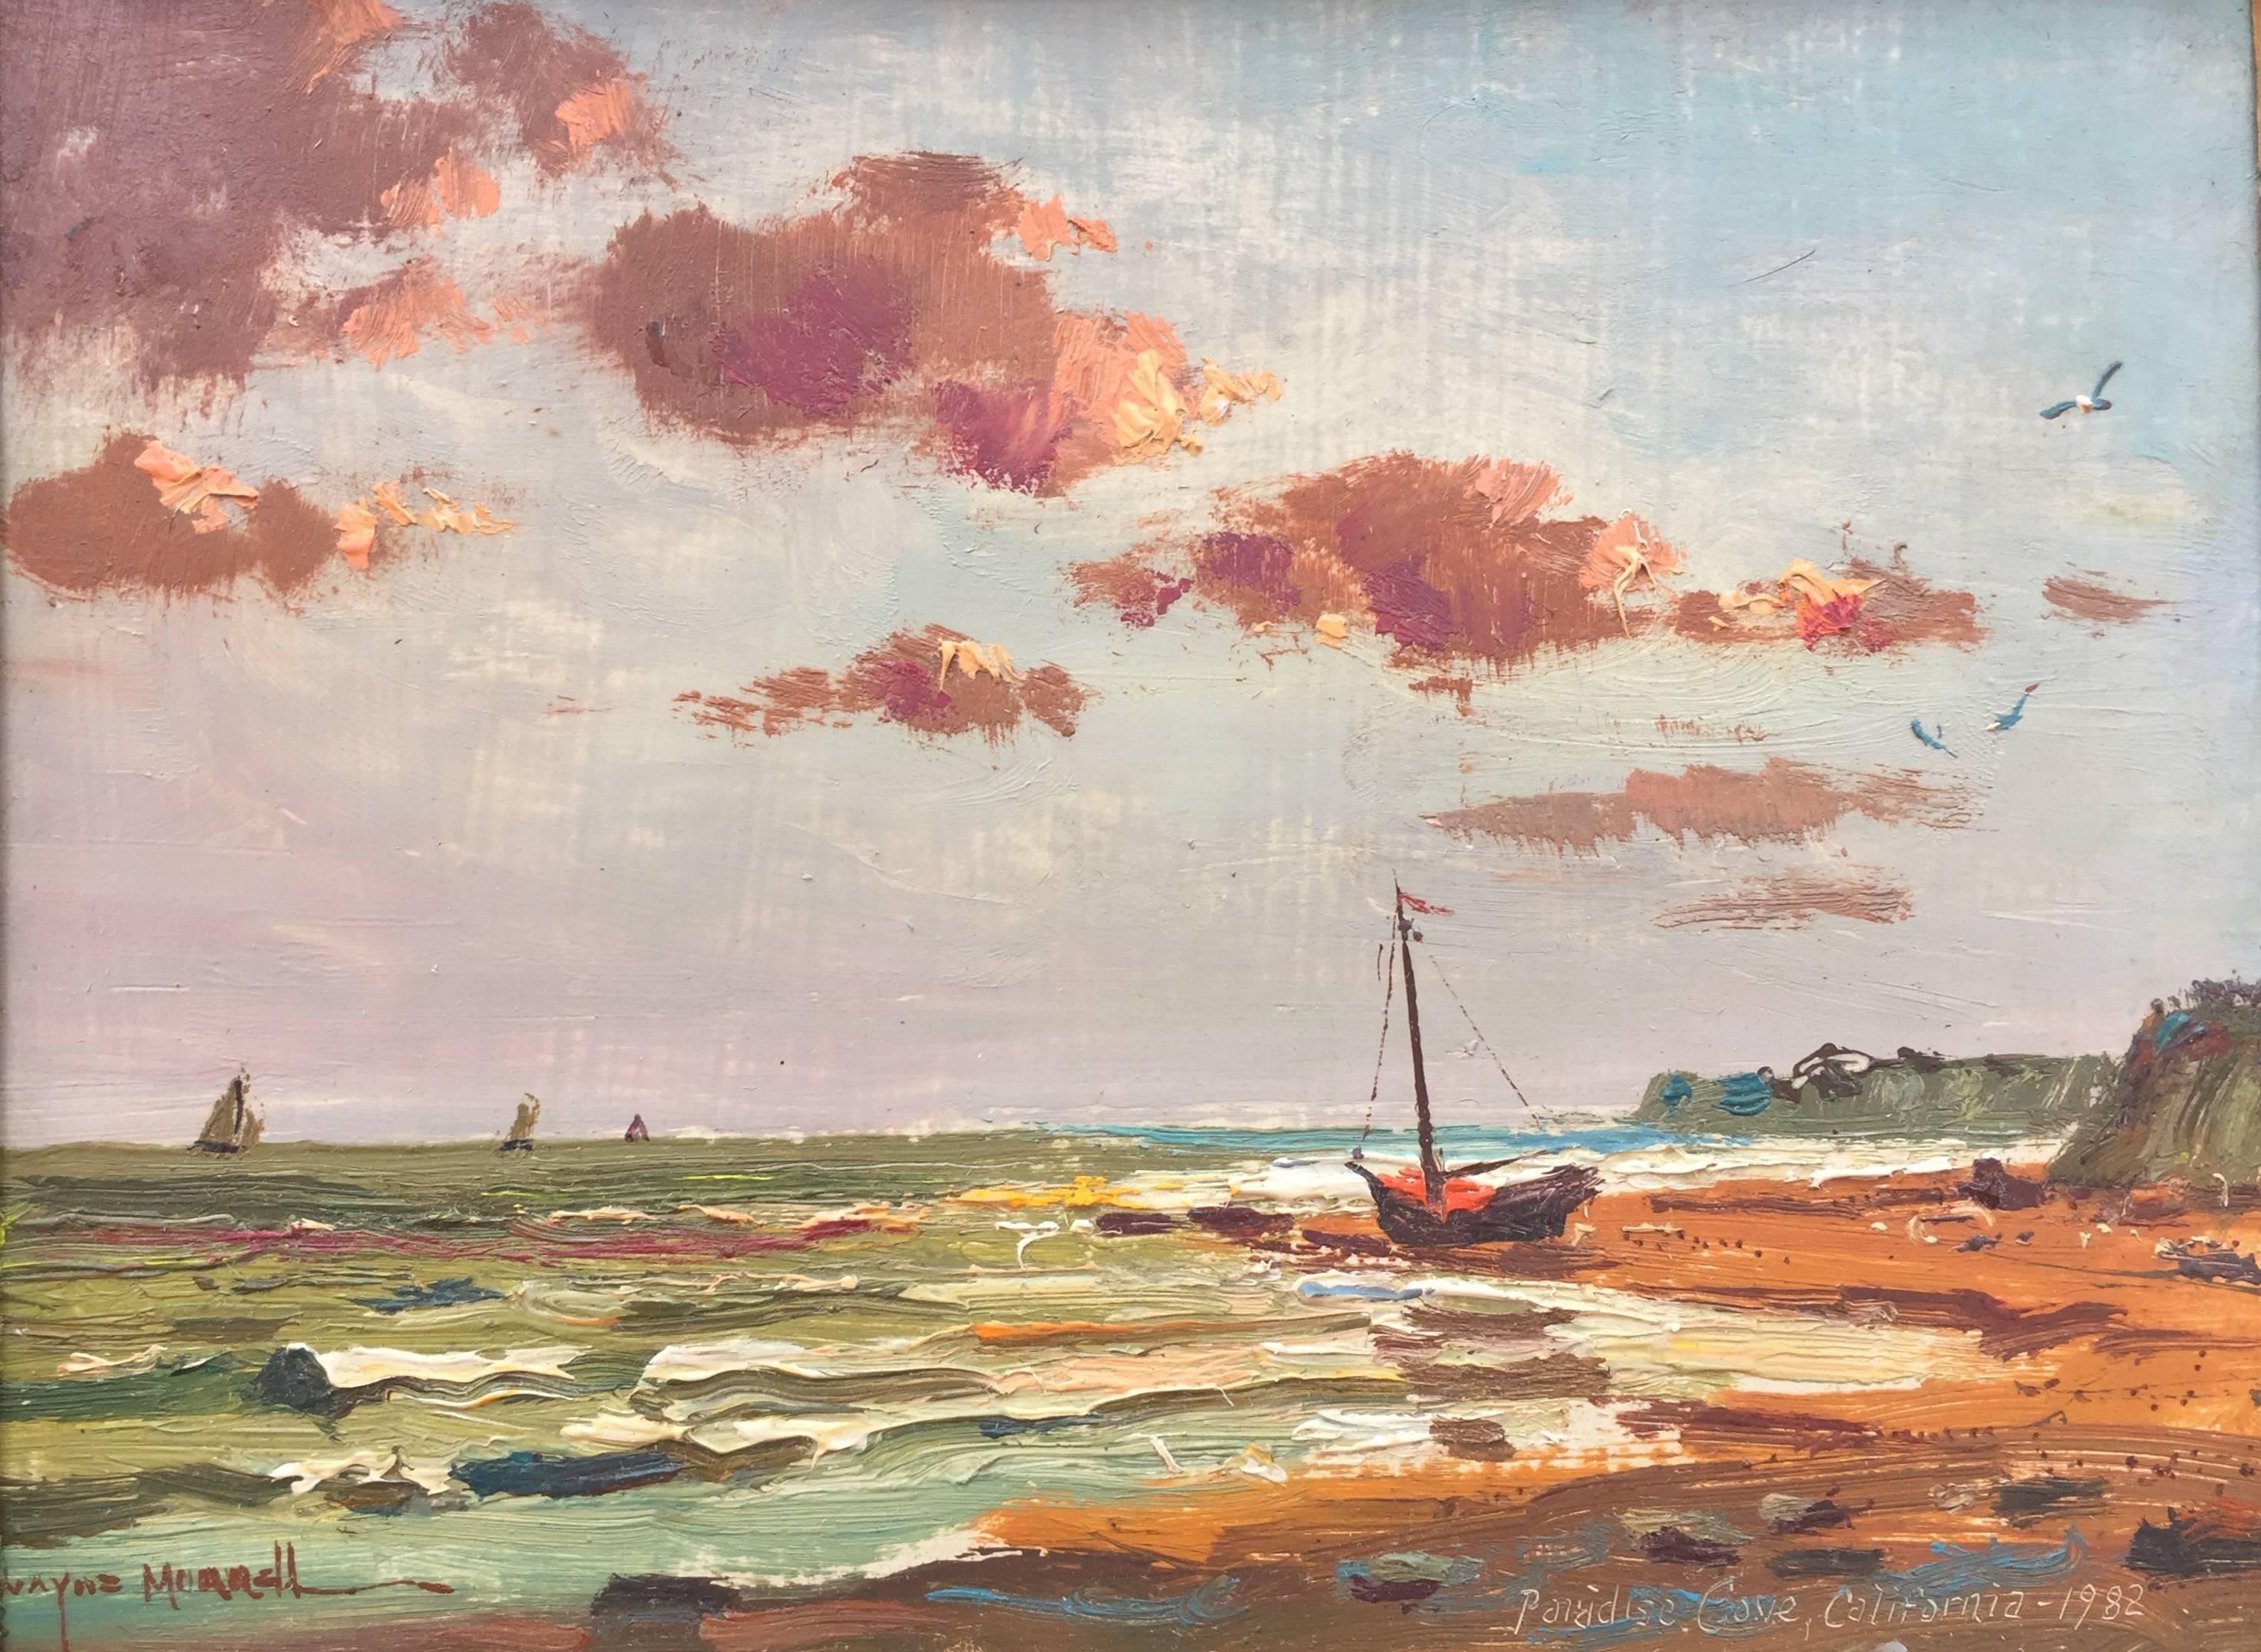 Wayne Beam Morrell Landscape Painting - "Paradise Cove, California"